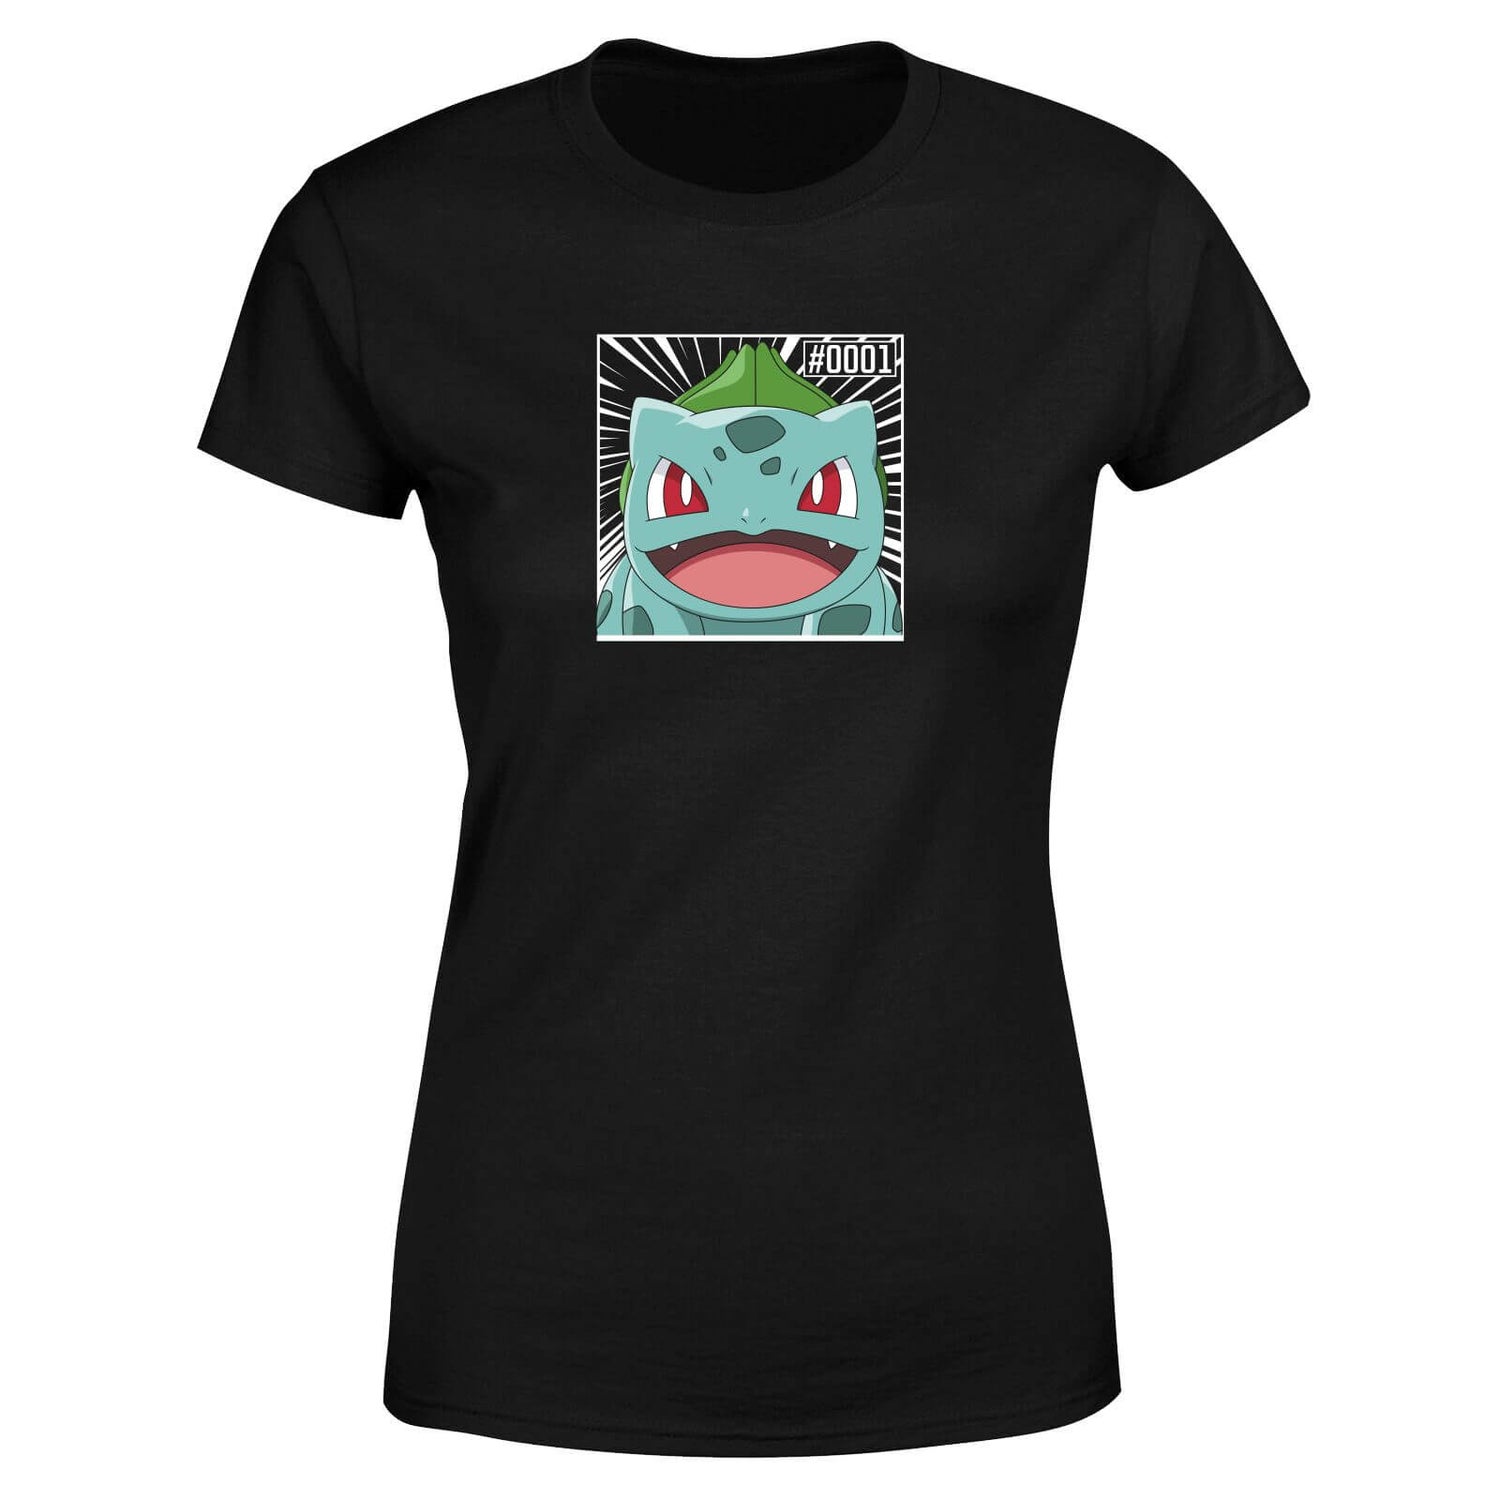 Pokémon Pokédex Bulbasaur #0001 Mujer Camiseta - Negro